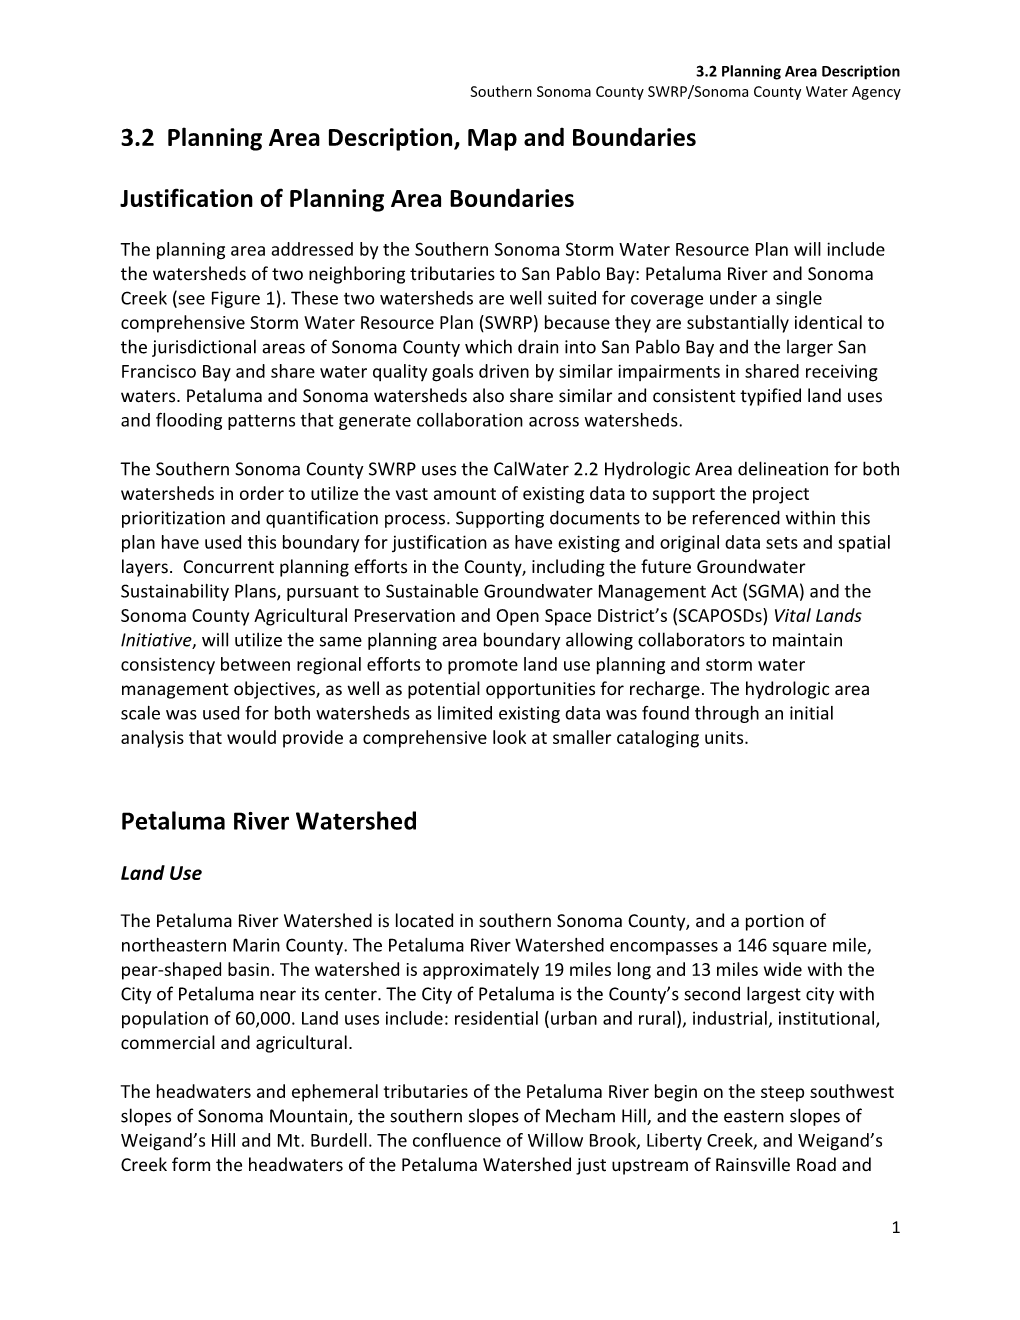 3.2 Planning Area Description, Map and Boundaries